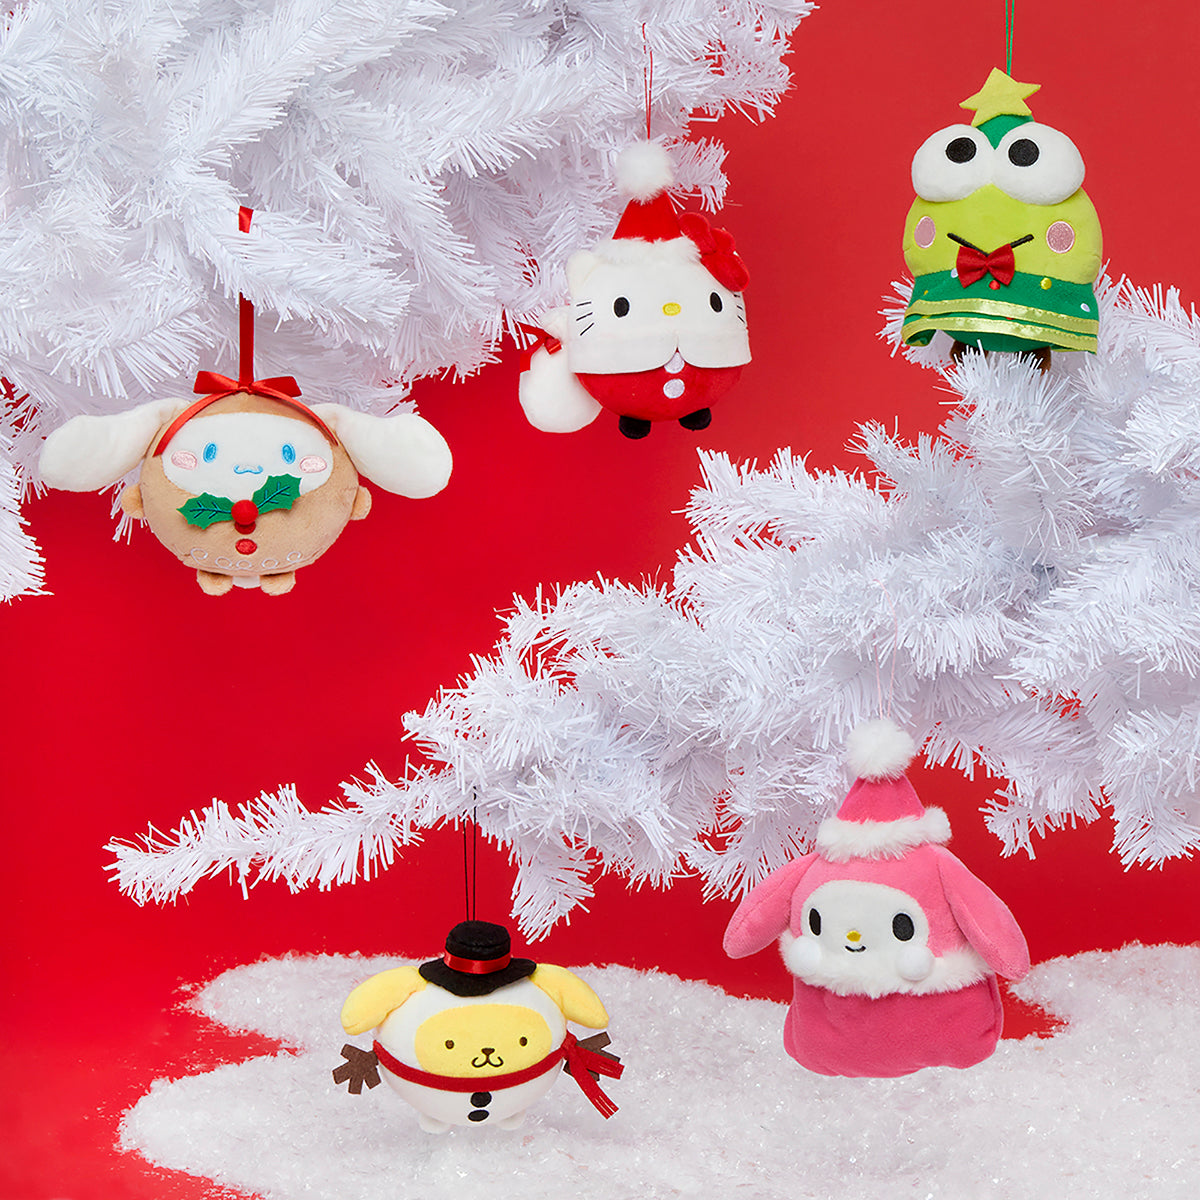 Hello Kitty &amp; Friends 6-pc Holiday Ornament Set Plush HUNET GLOBAL CREATIONS INC   